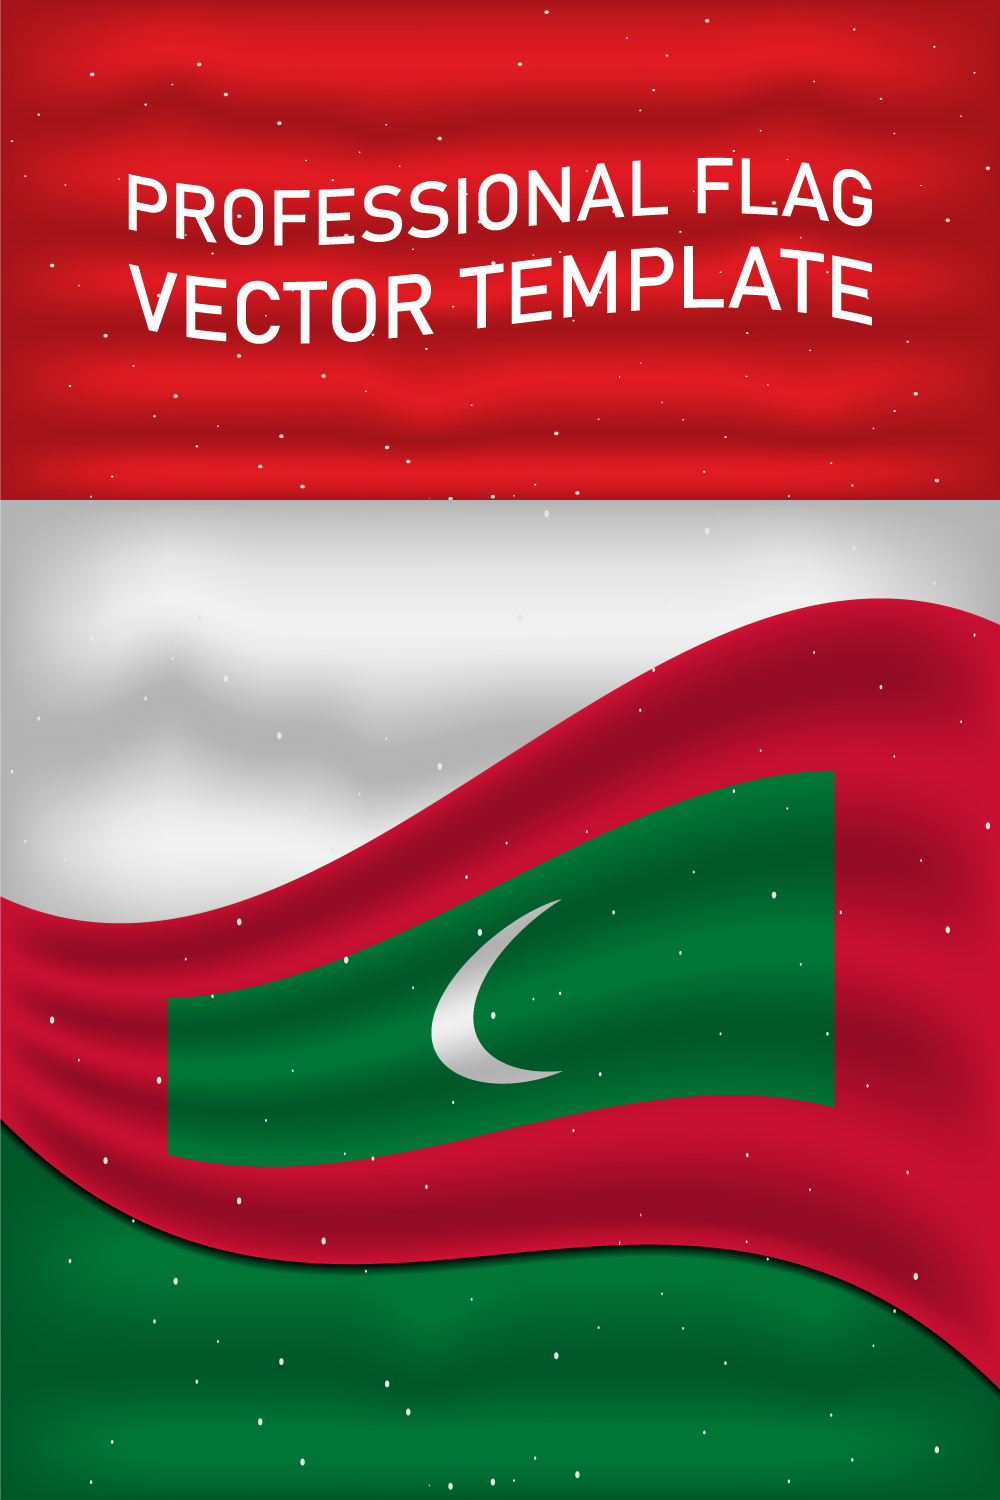 Beautiful image of the Maldives flag.